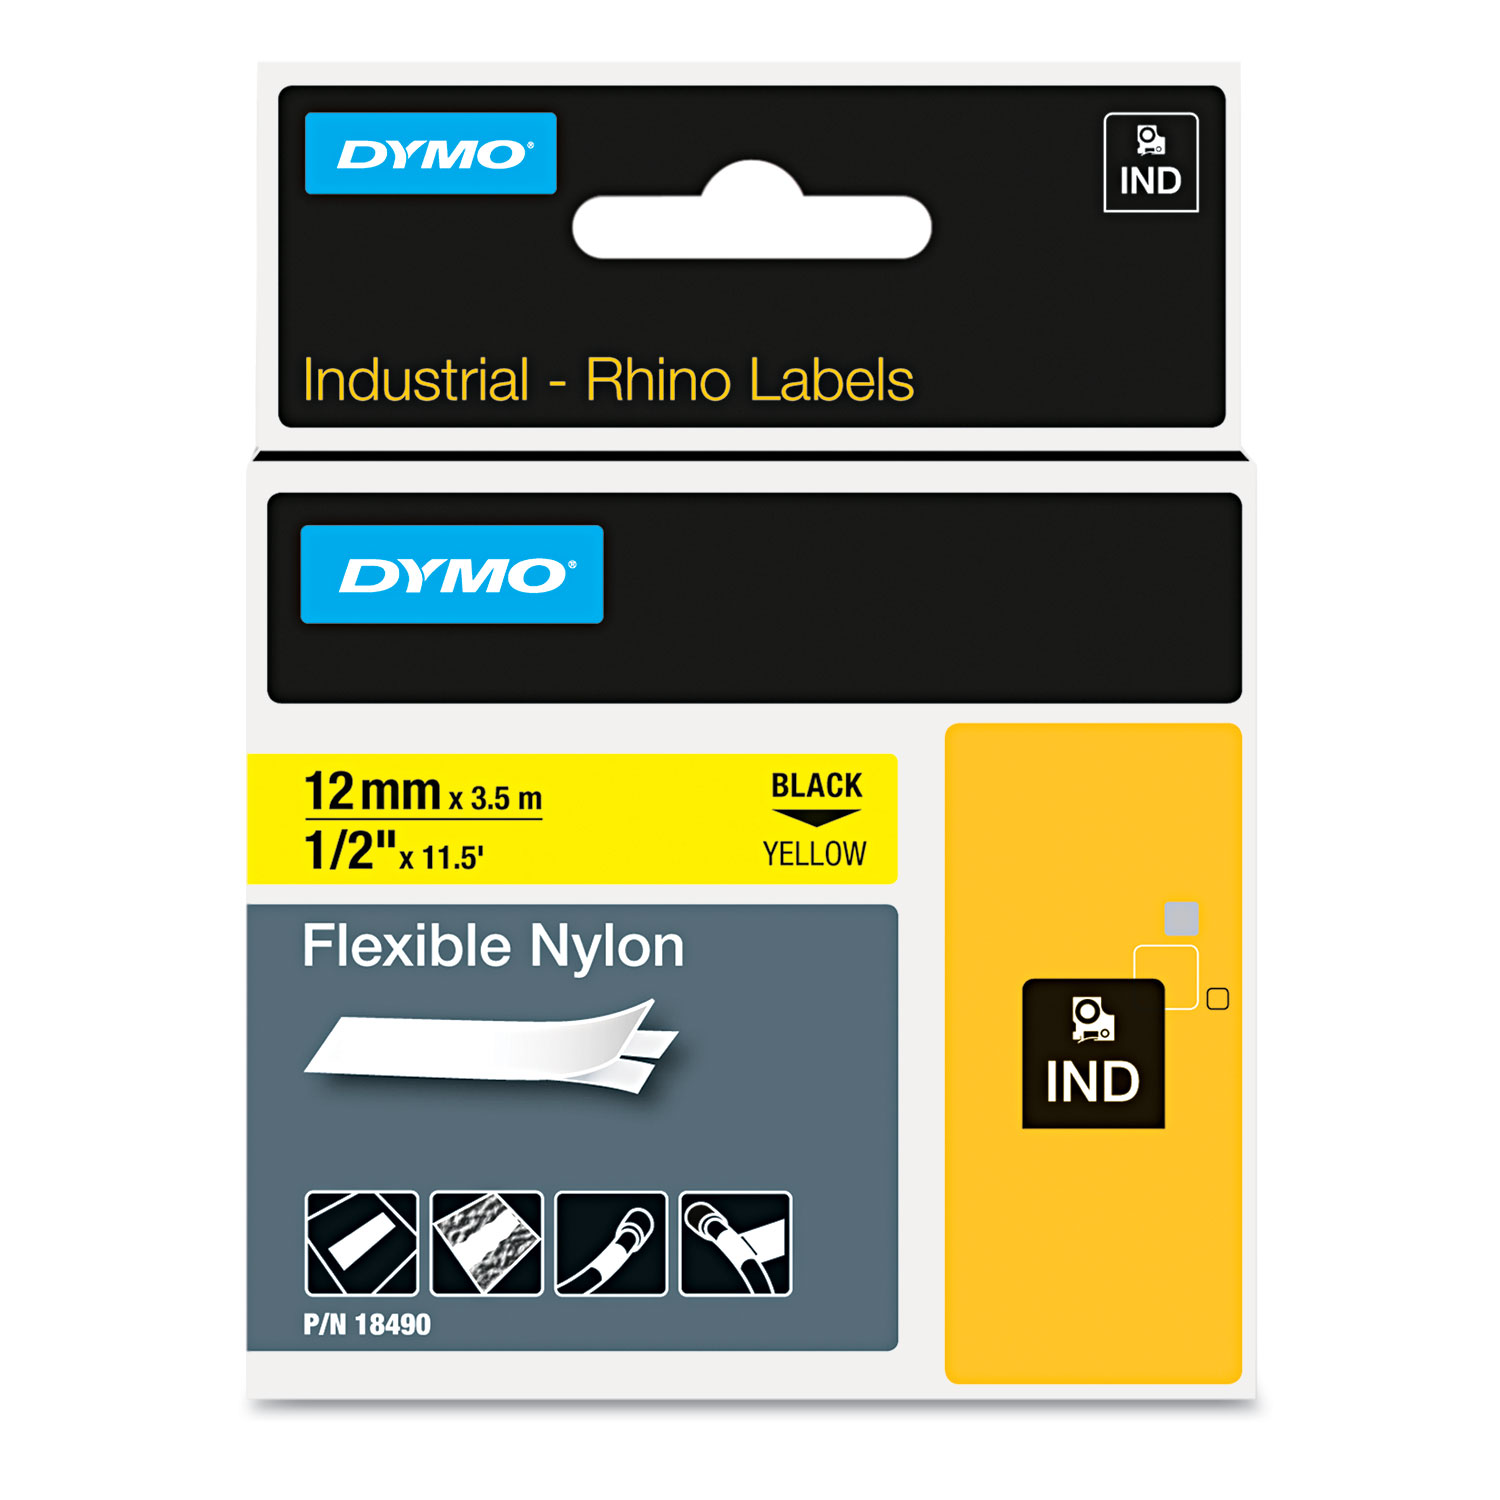 Rhino Flexible Nylon Industrial Label Tape, 1/2 x 11 1/2 ft, Yellow/Black Print